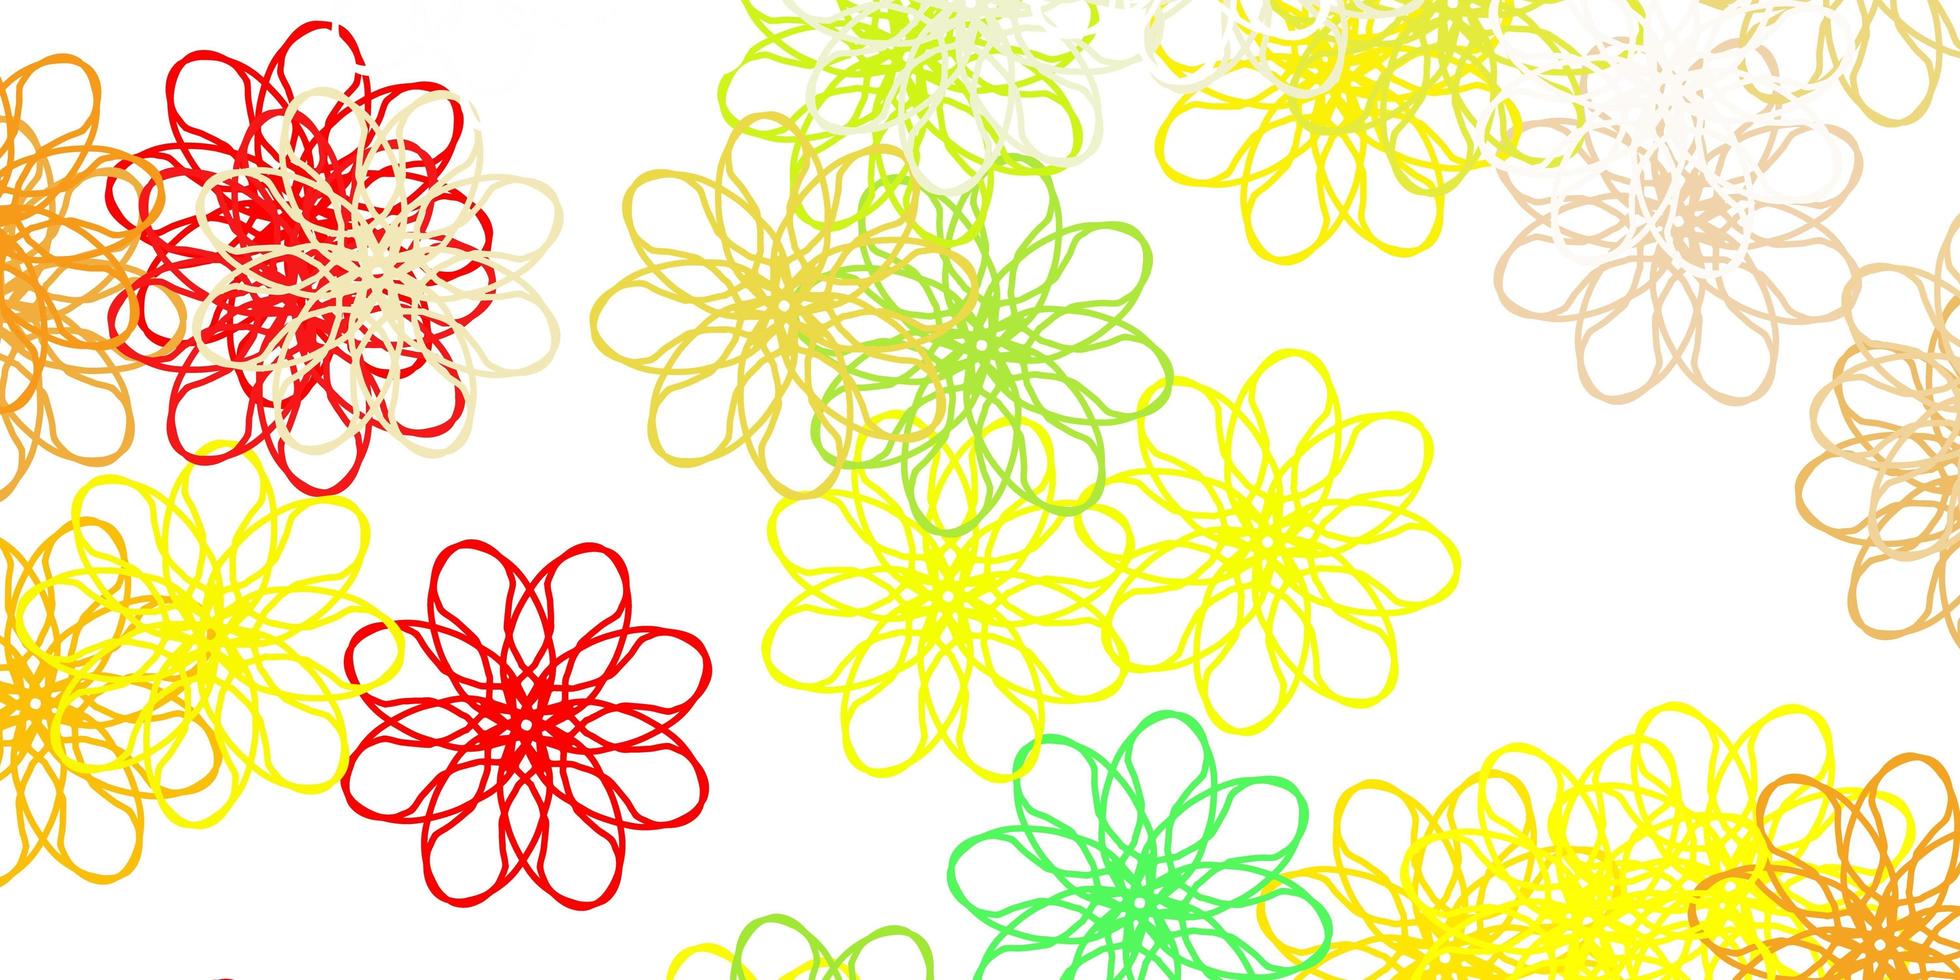 Light Multicolor Doodle Flowers vector